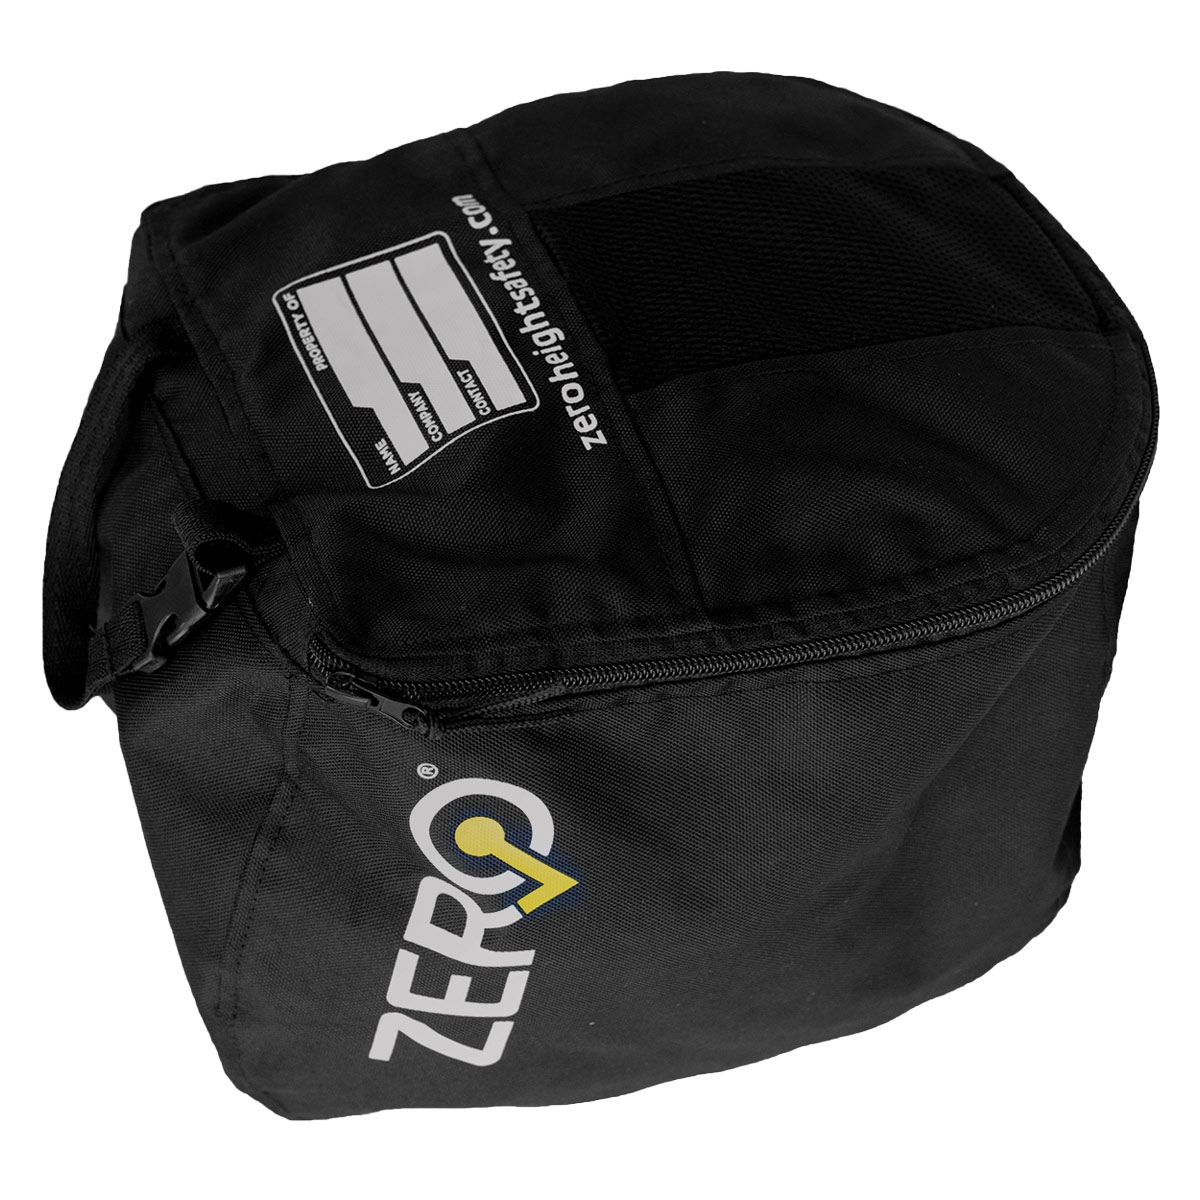 Zero Helmet Bag Black